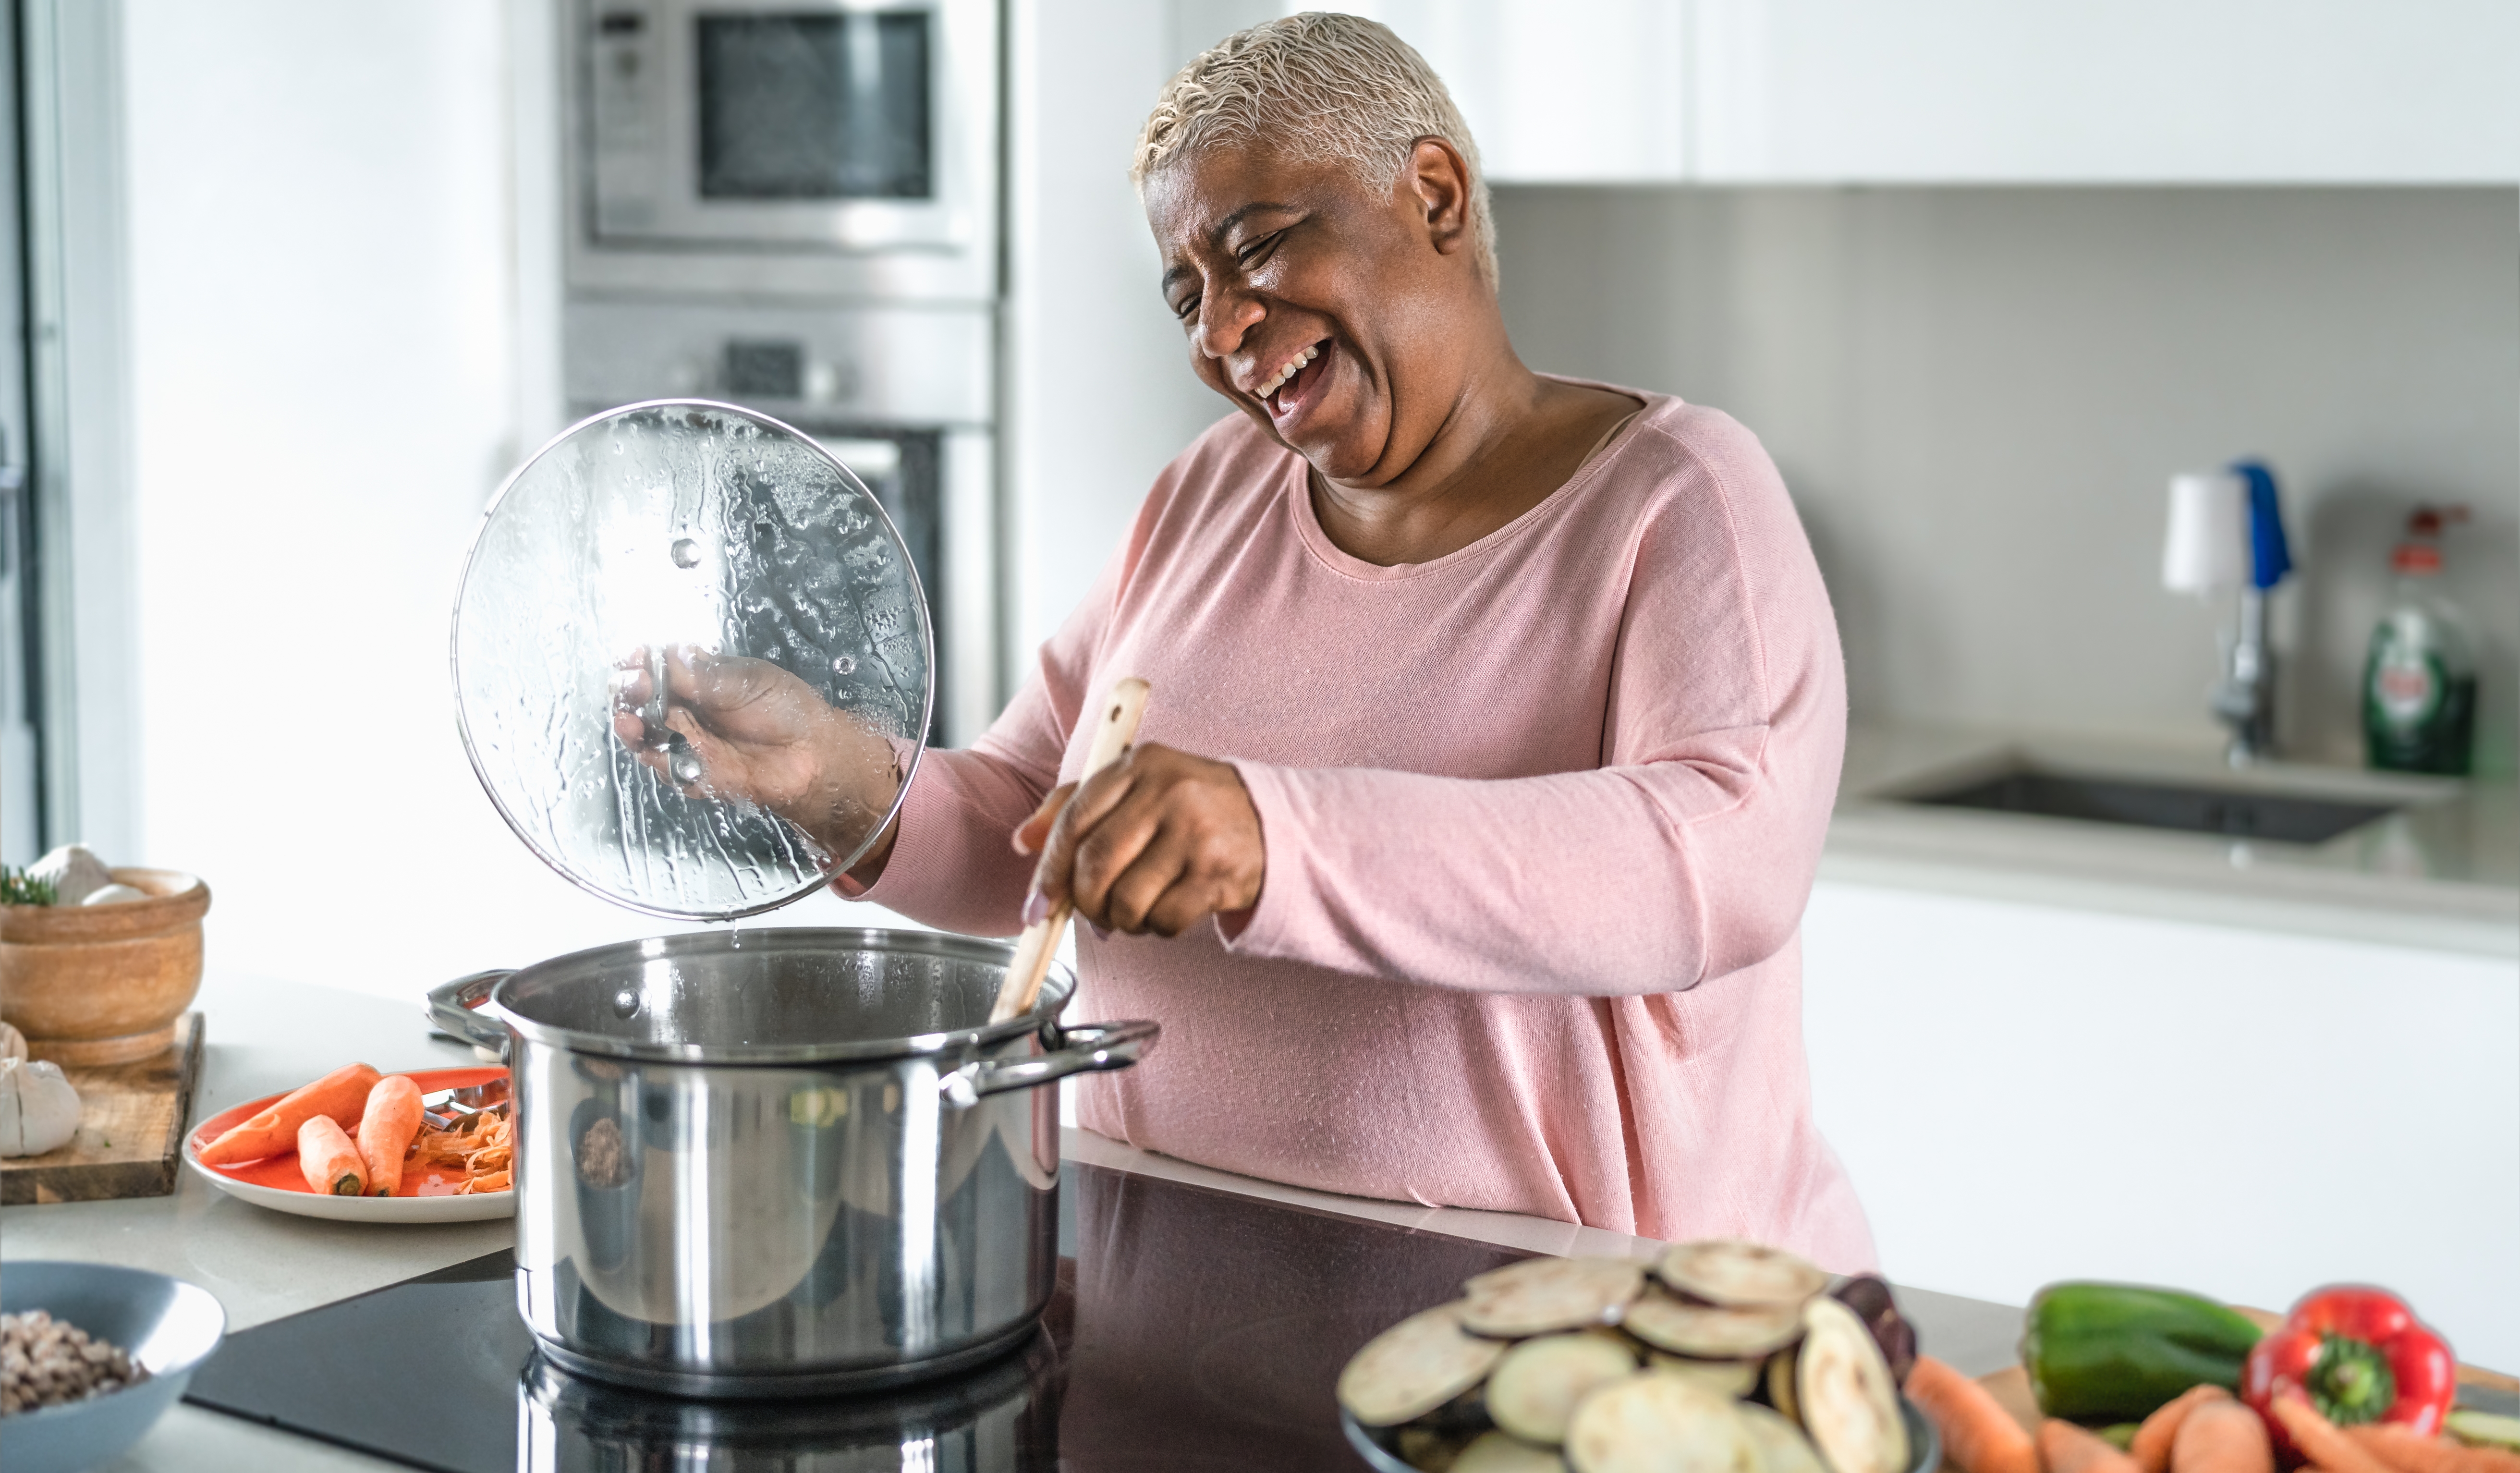 Femme âgée souriant en cuisinant | Source : Shutterstock